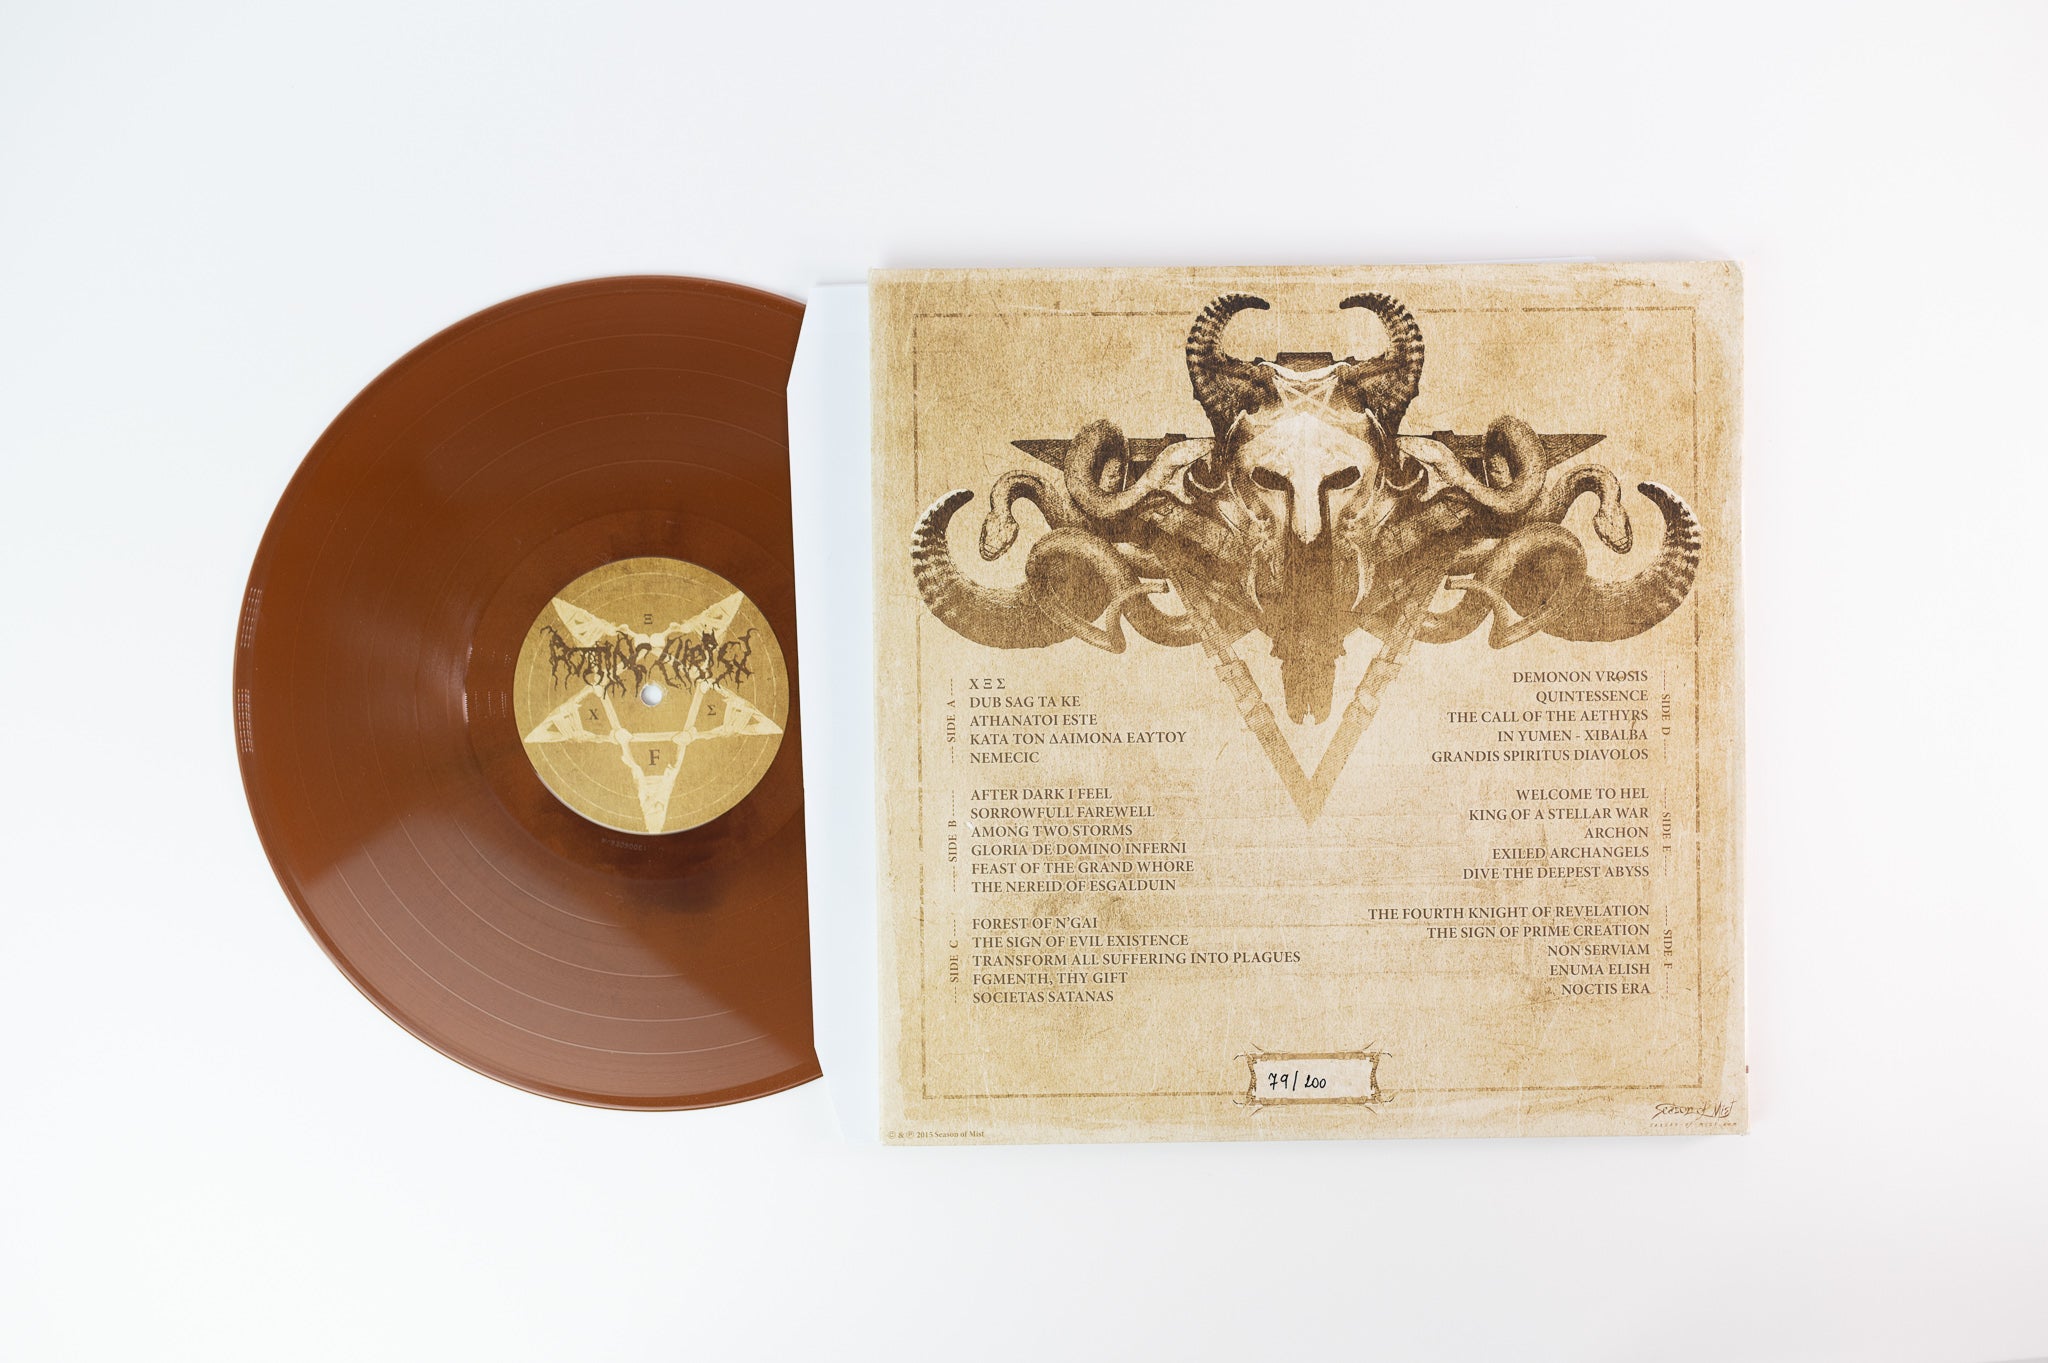 Rotting Christ - Lucifer Over Athens on Season of Mist Limited Numbered Brown Haze Vinyl